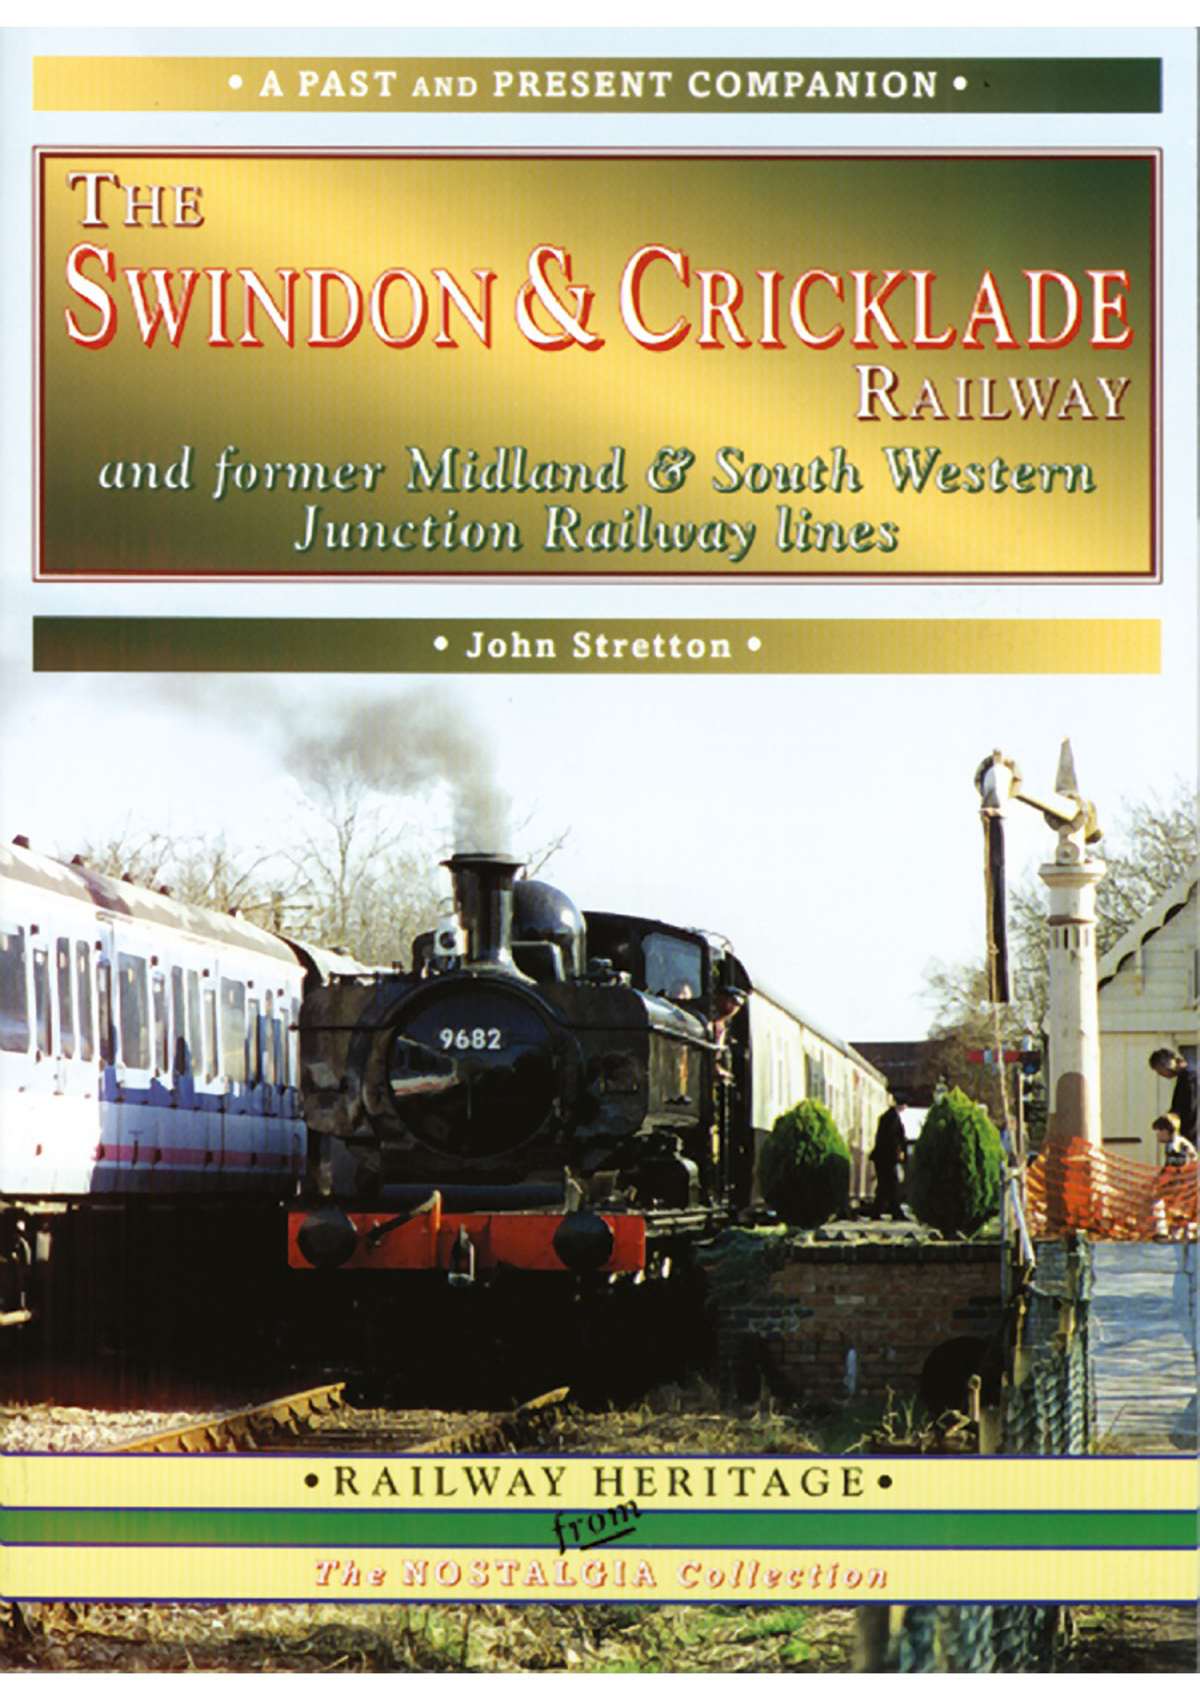 2185 - The Swindon & Cricklade Railway